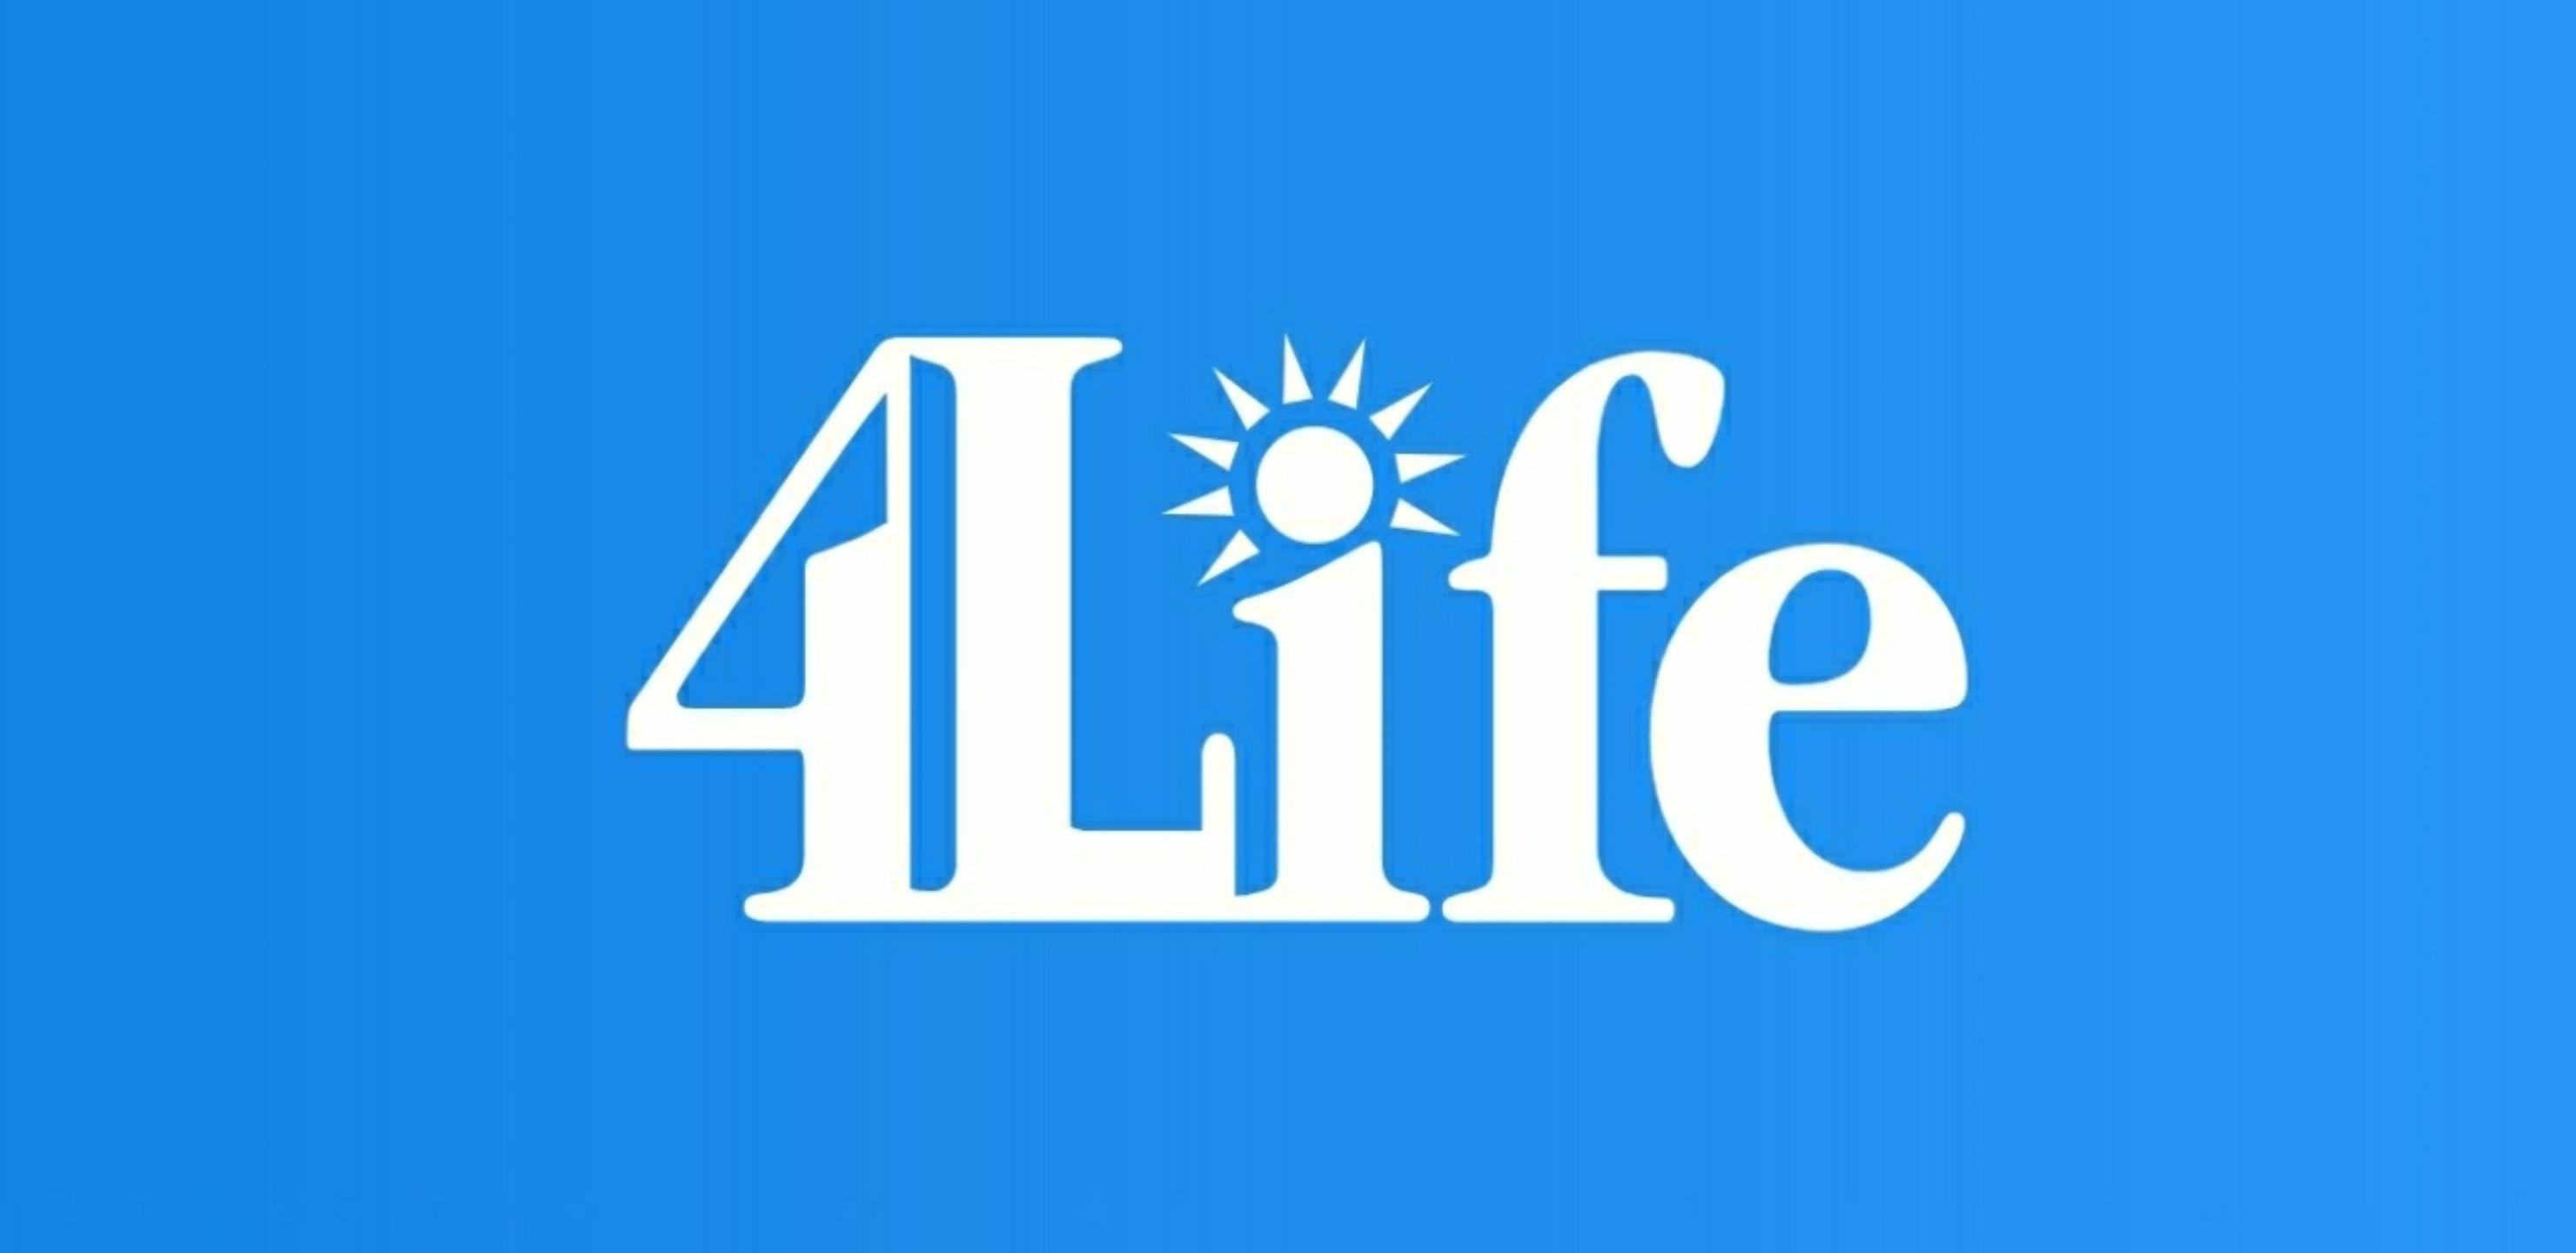 Only 4 life. 4life. 4life лого.